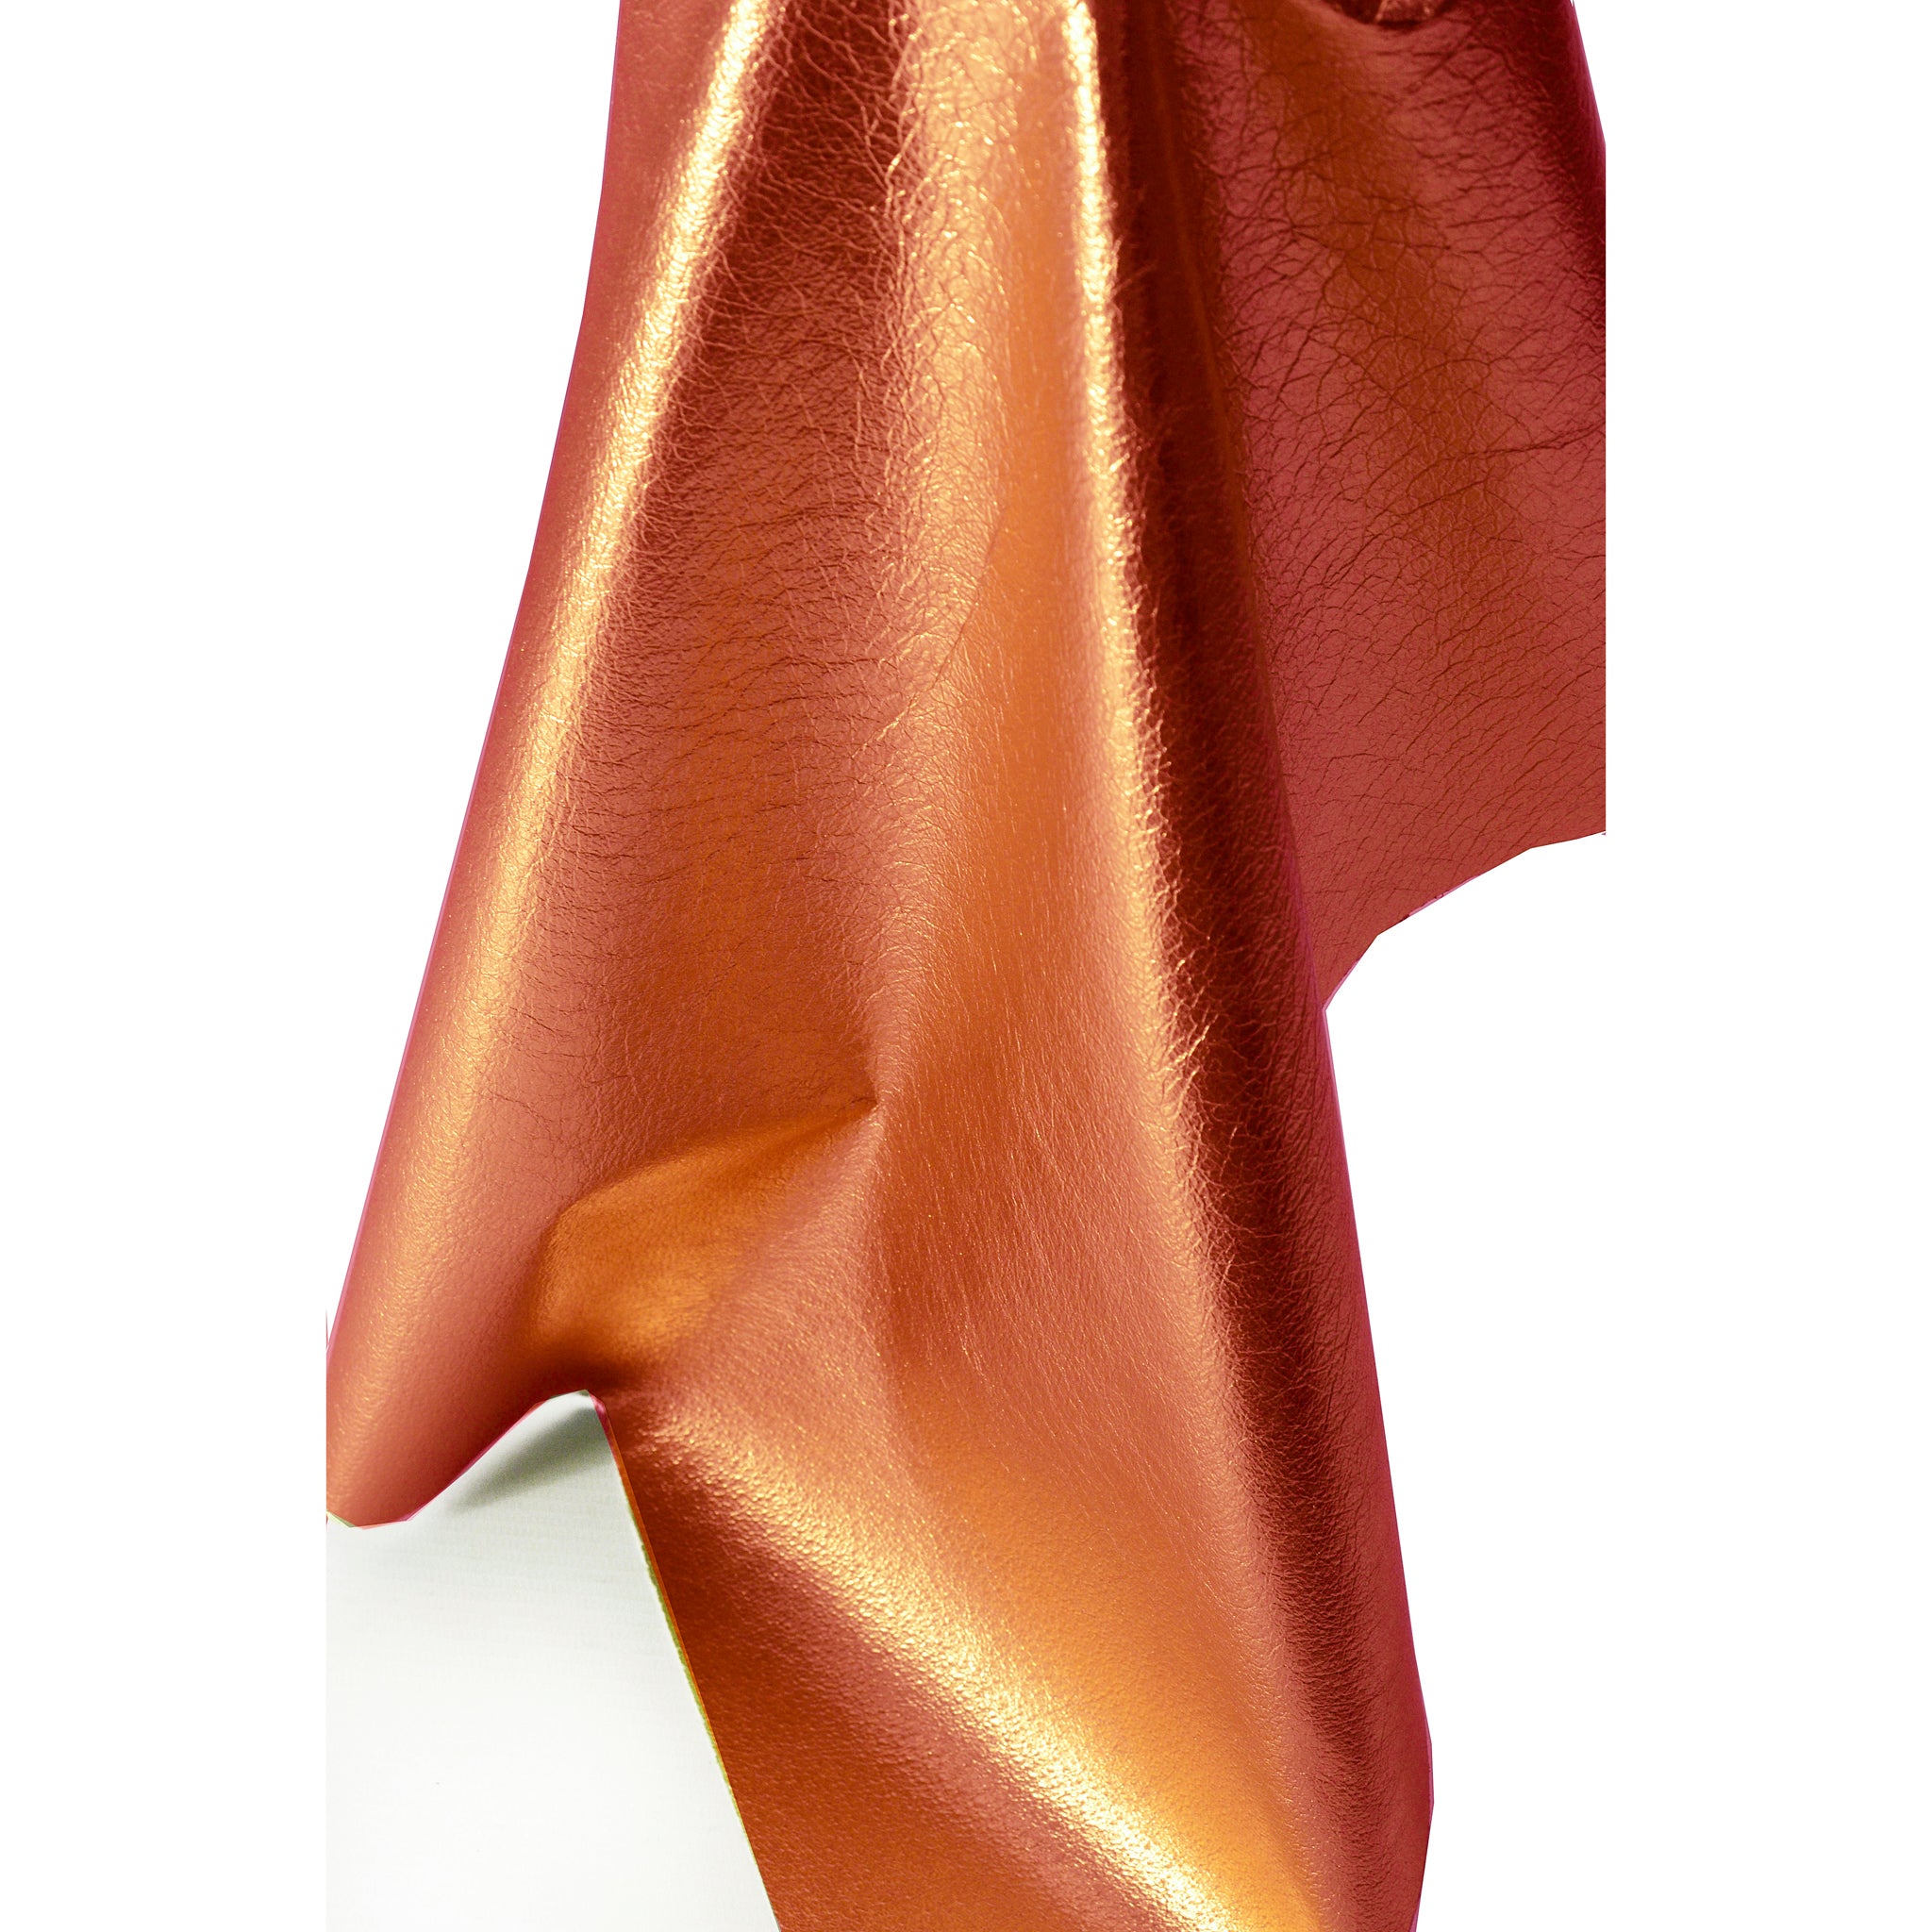 Orange Metallic Foil Leather from Identity Leathercraft